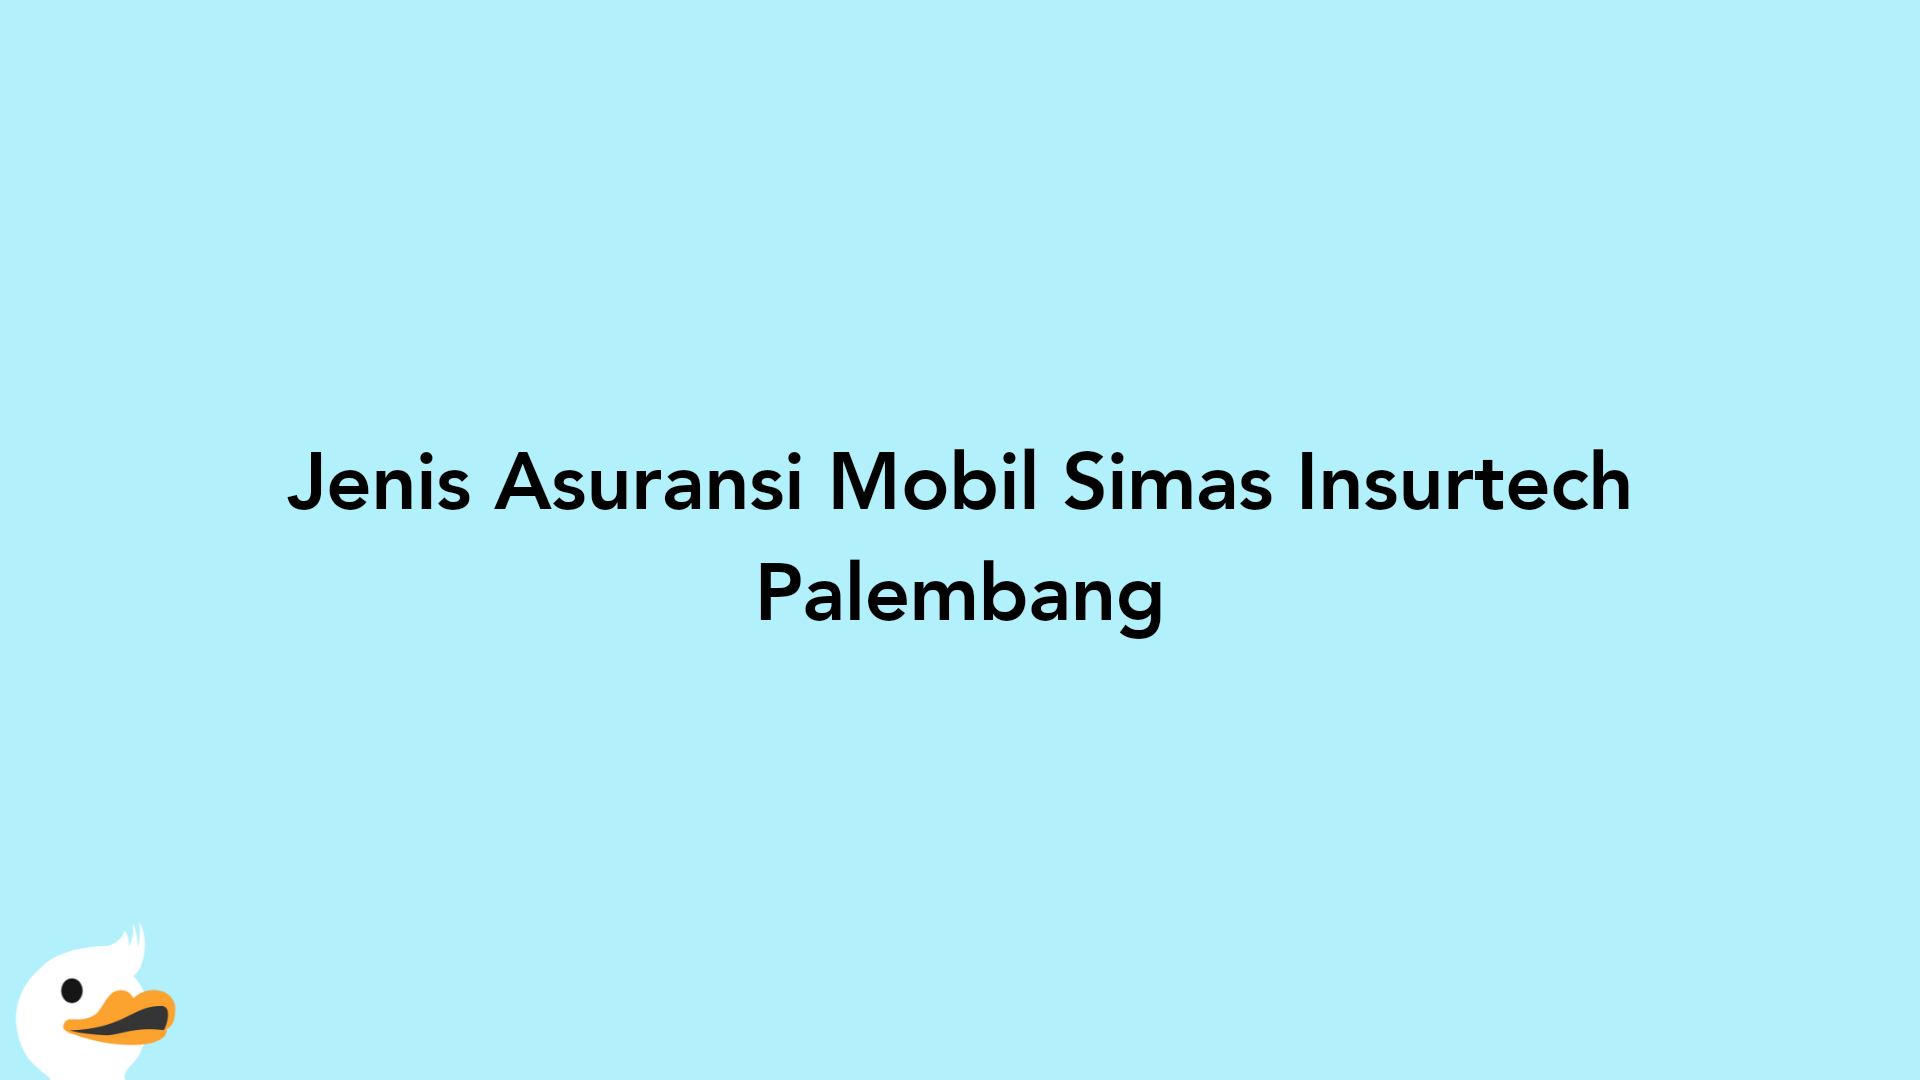 Jenis Asuransi Mobil Simas Insurtech Palembang